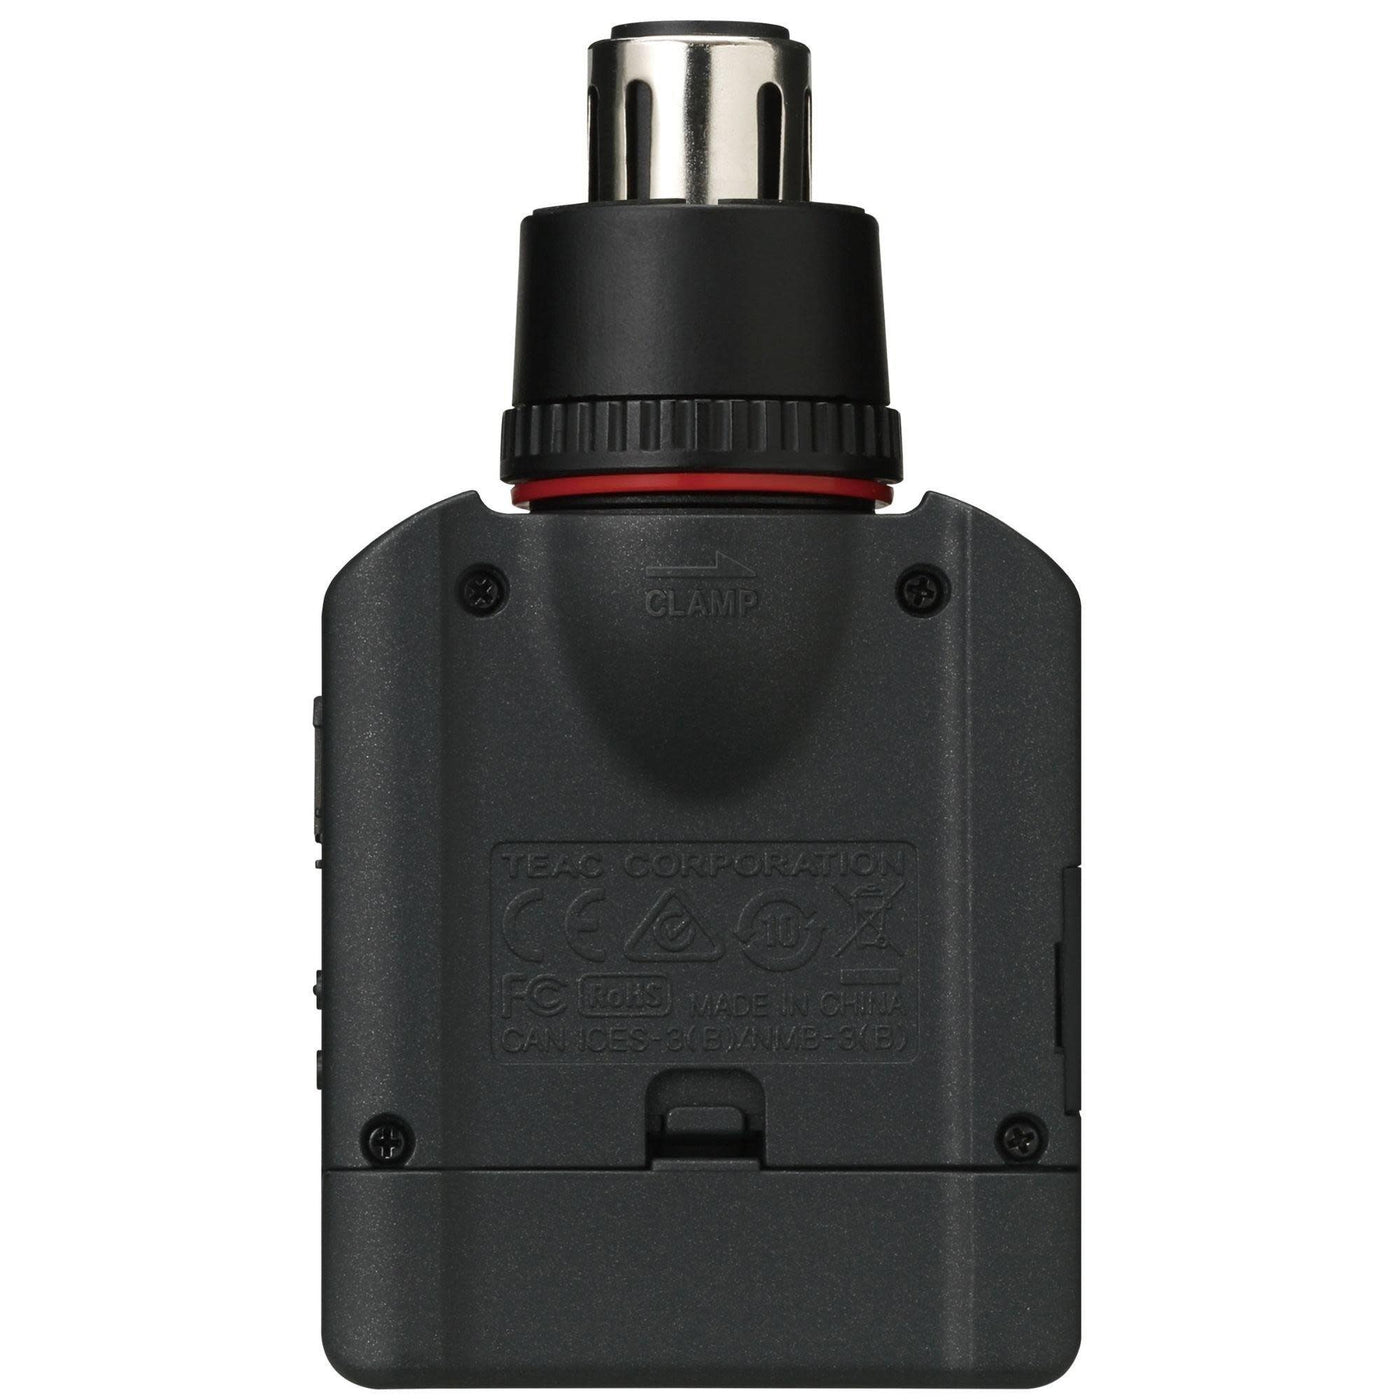 Tascam DR-10X Plug-On Linear PCM Digital Audio Recorder for XLR Microphones